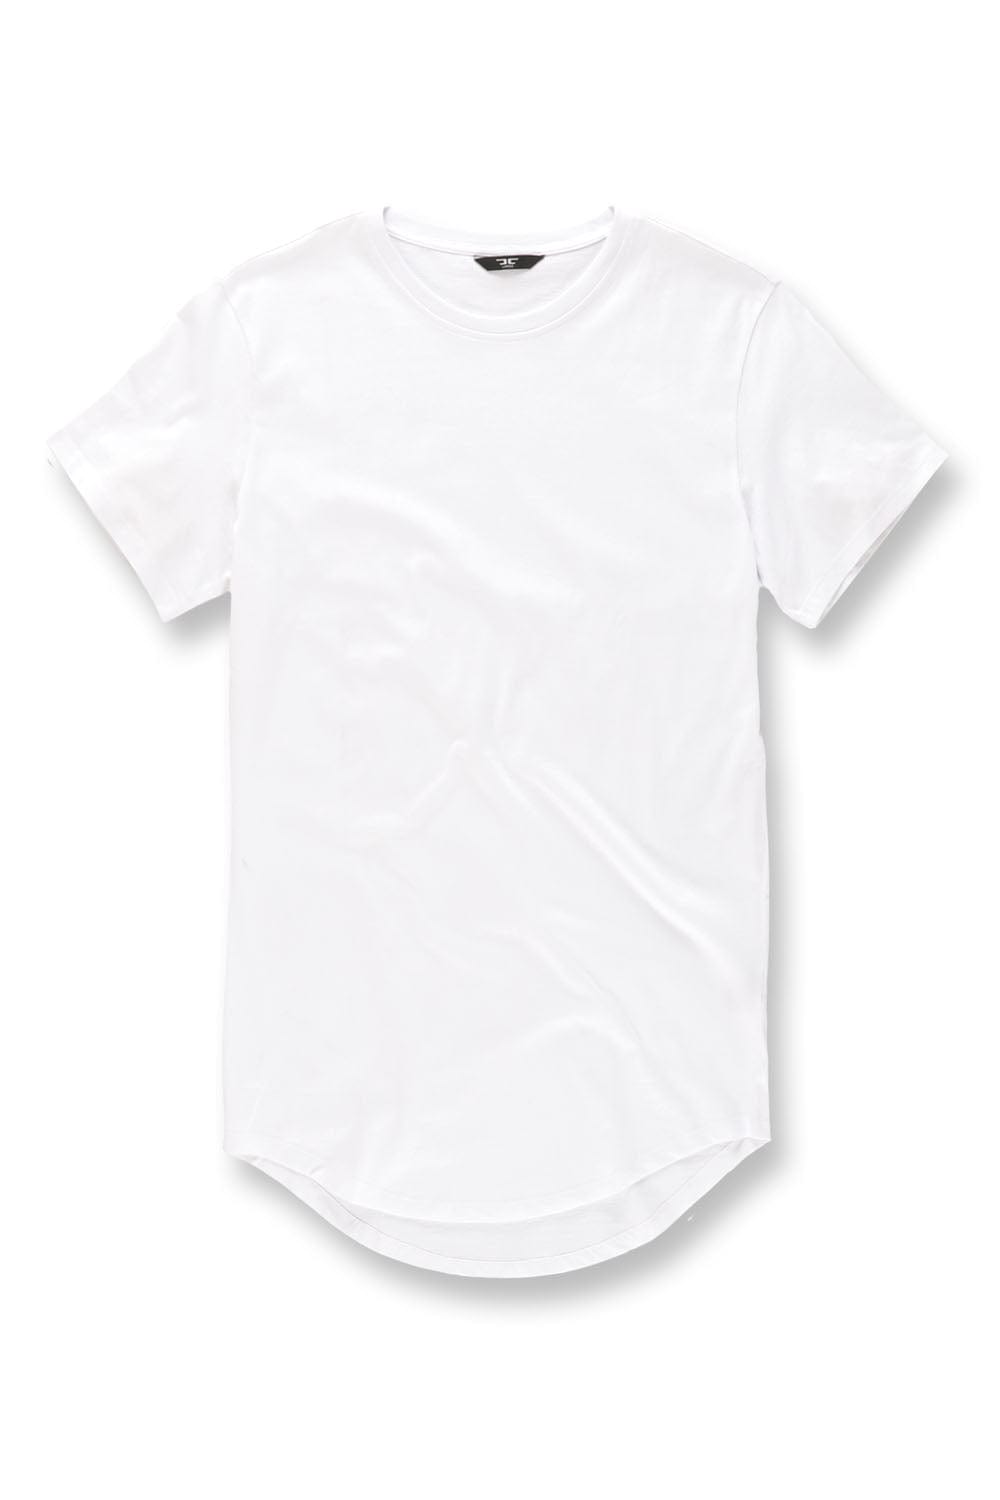 Jordan Craig Scallop T-Shirt (Name Your Price) S / White